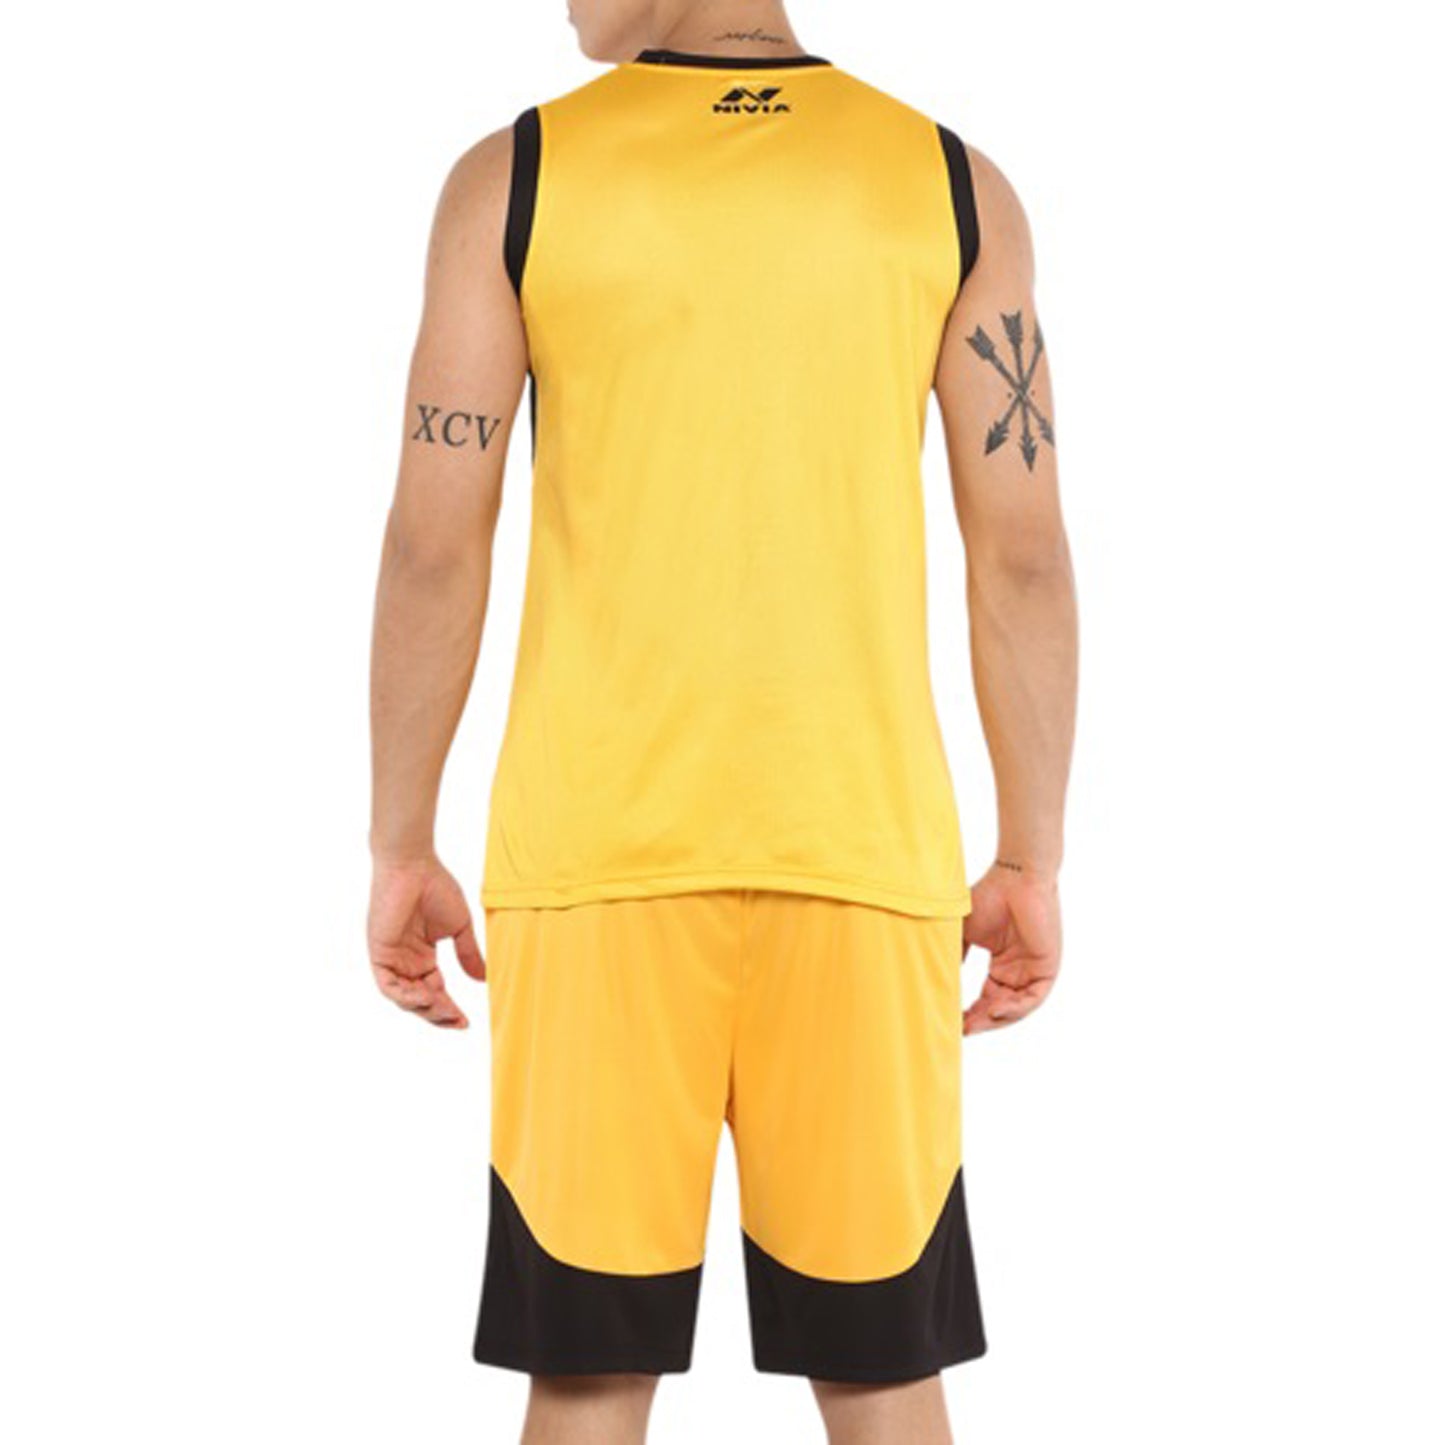 Nivia 2103 Phantom Jersey Set for Men, G.Yellow/Black - Best Price online Prokicksports.com